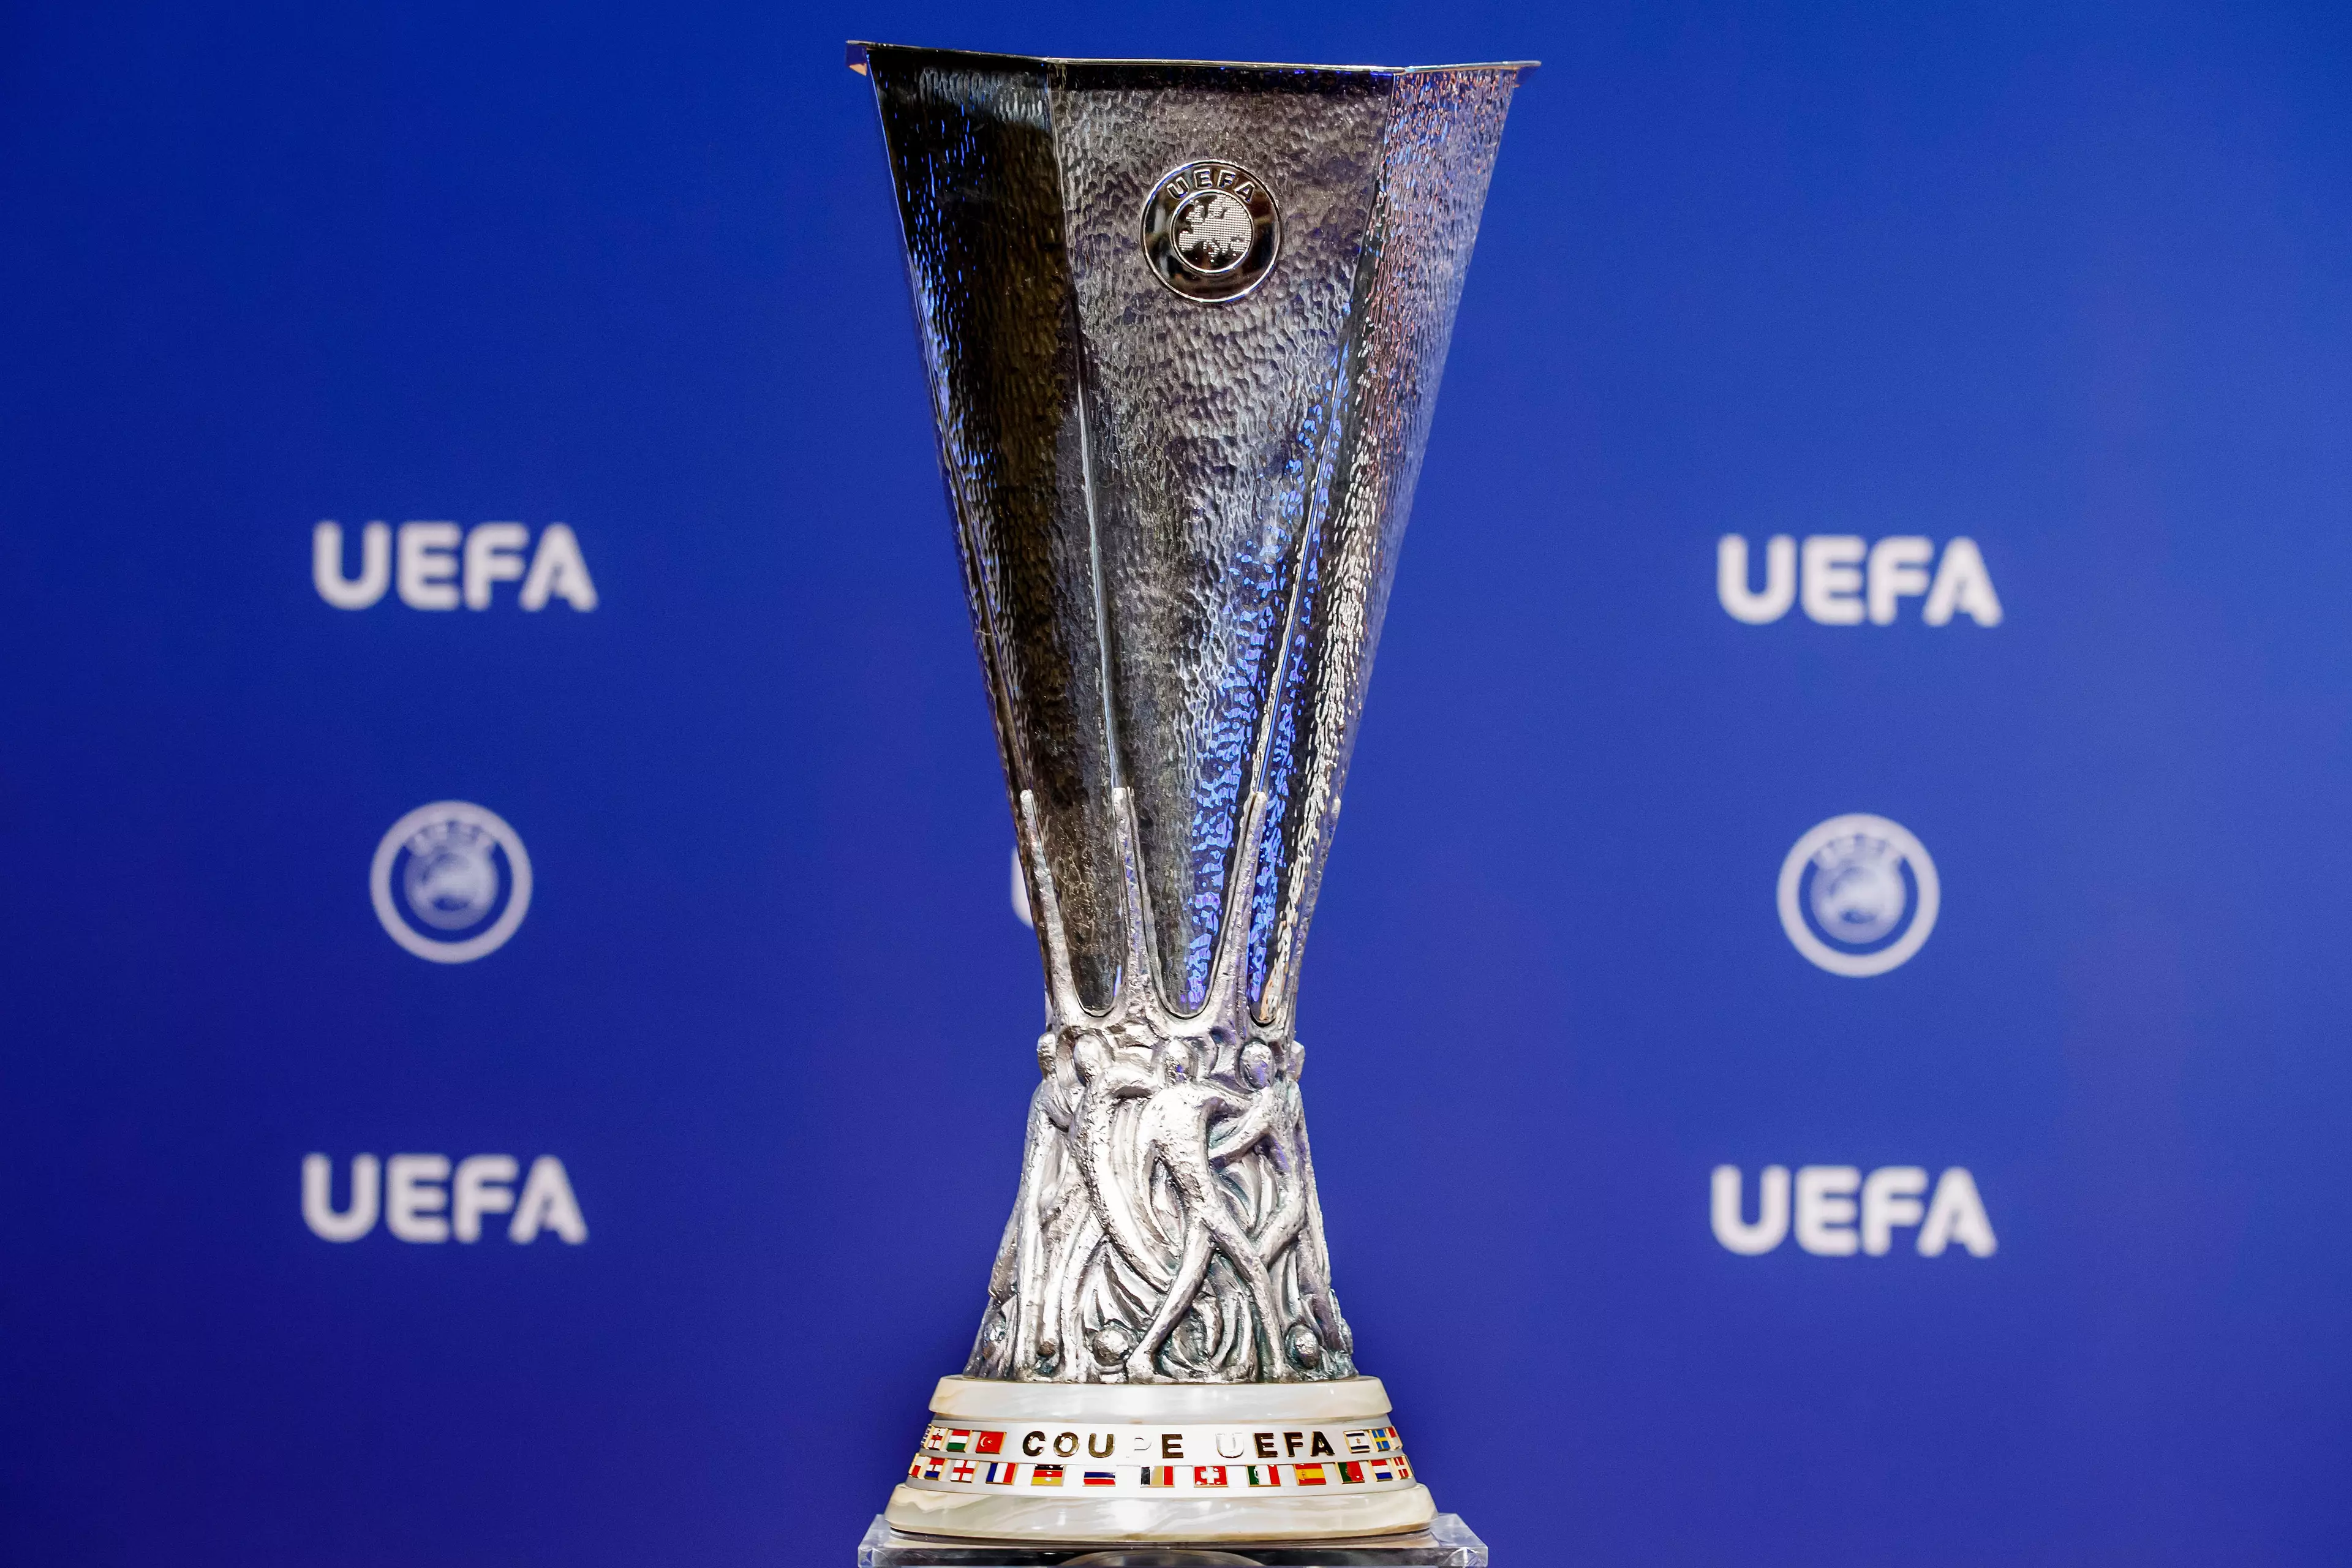 The Europa League trophy. Image: PA